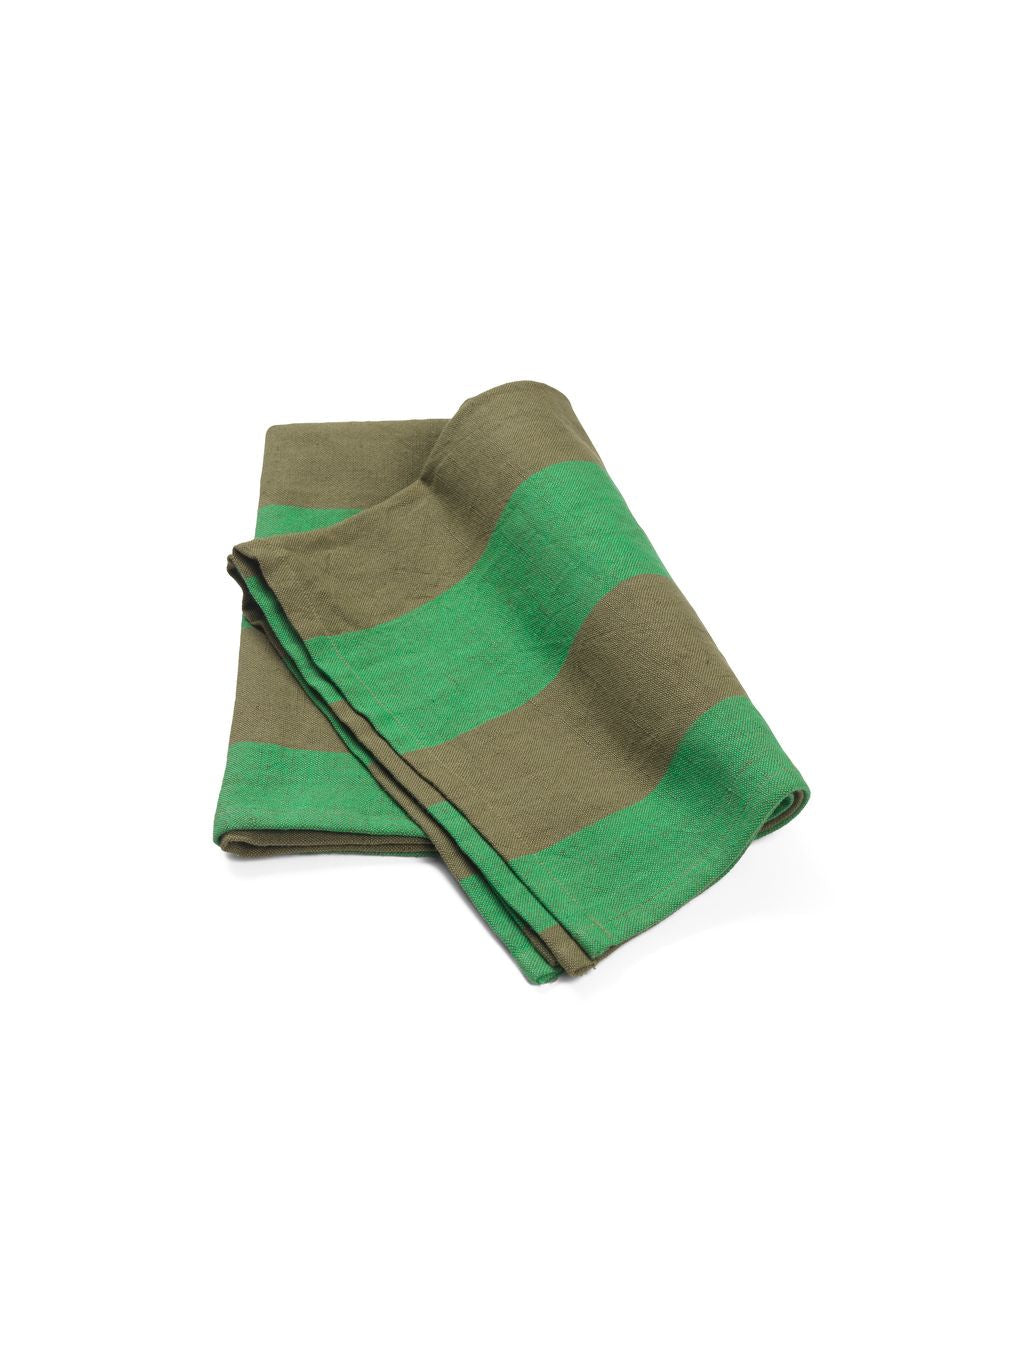 Ferm Living Hale Tea Towel, Olive/Green